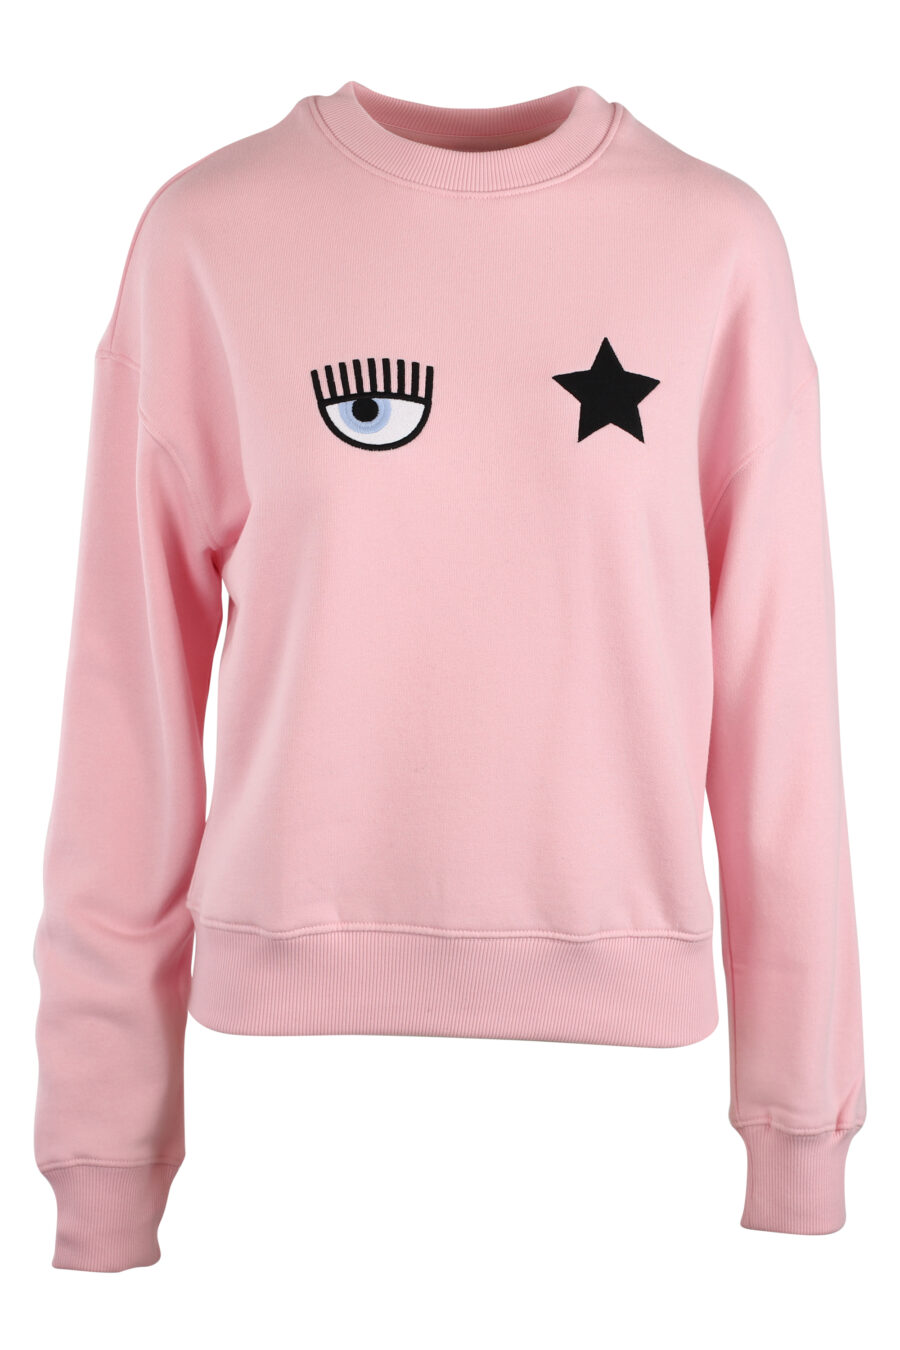 Pink sweatshirt with eye and star logo - IMG 5511